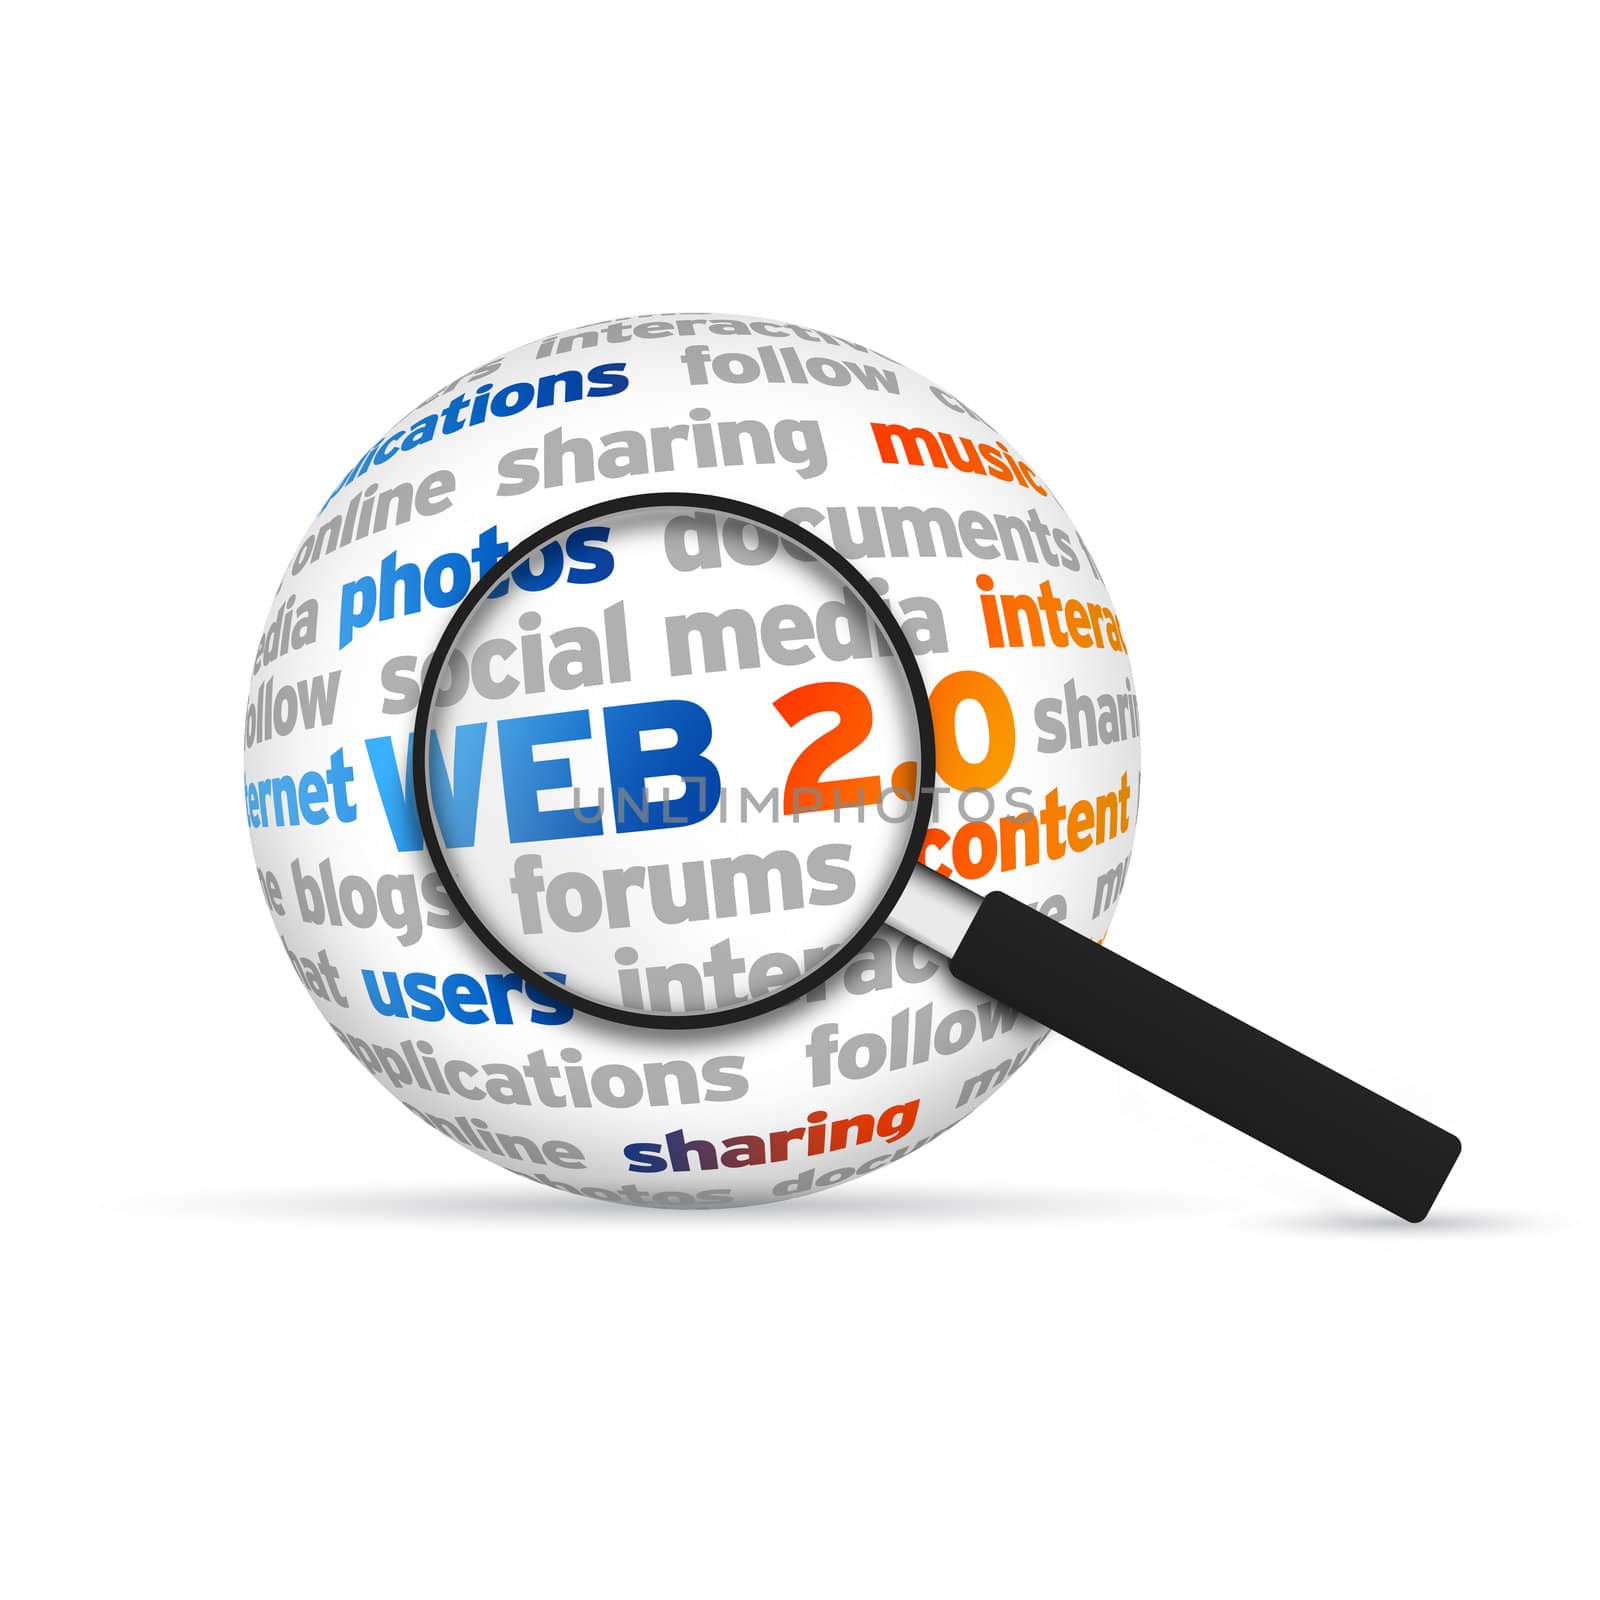 Web 2.0 by kbuntu